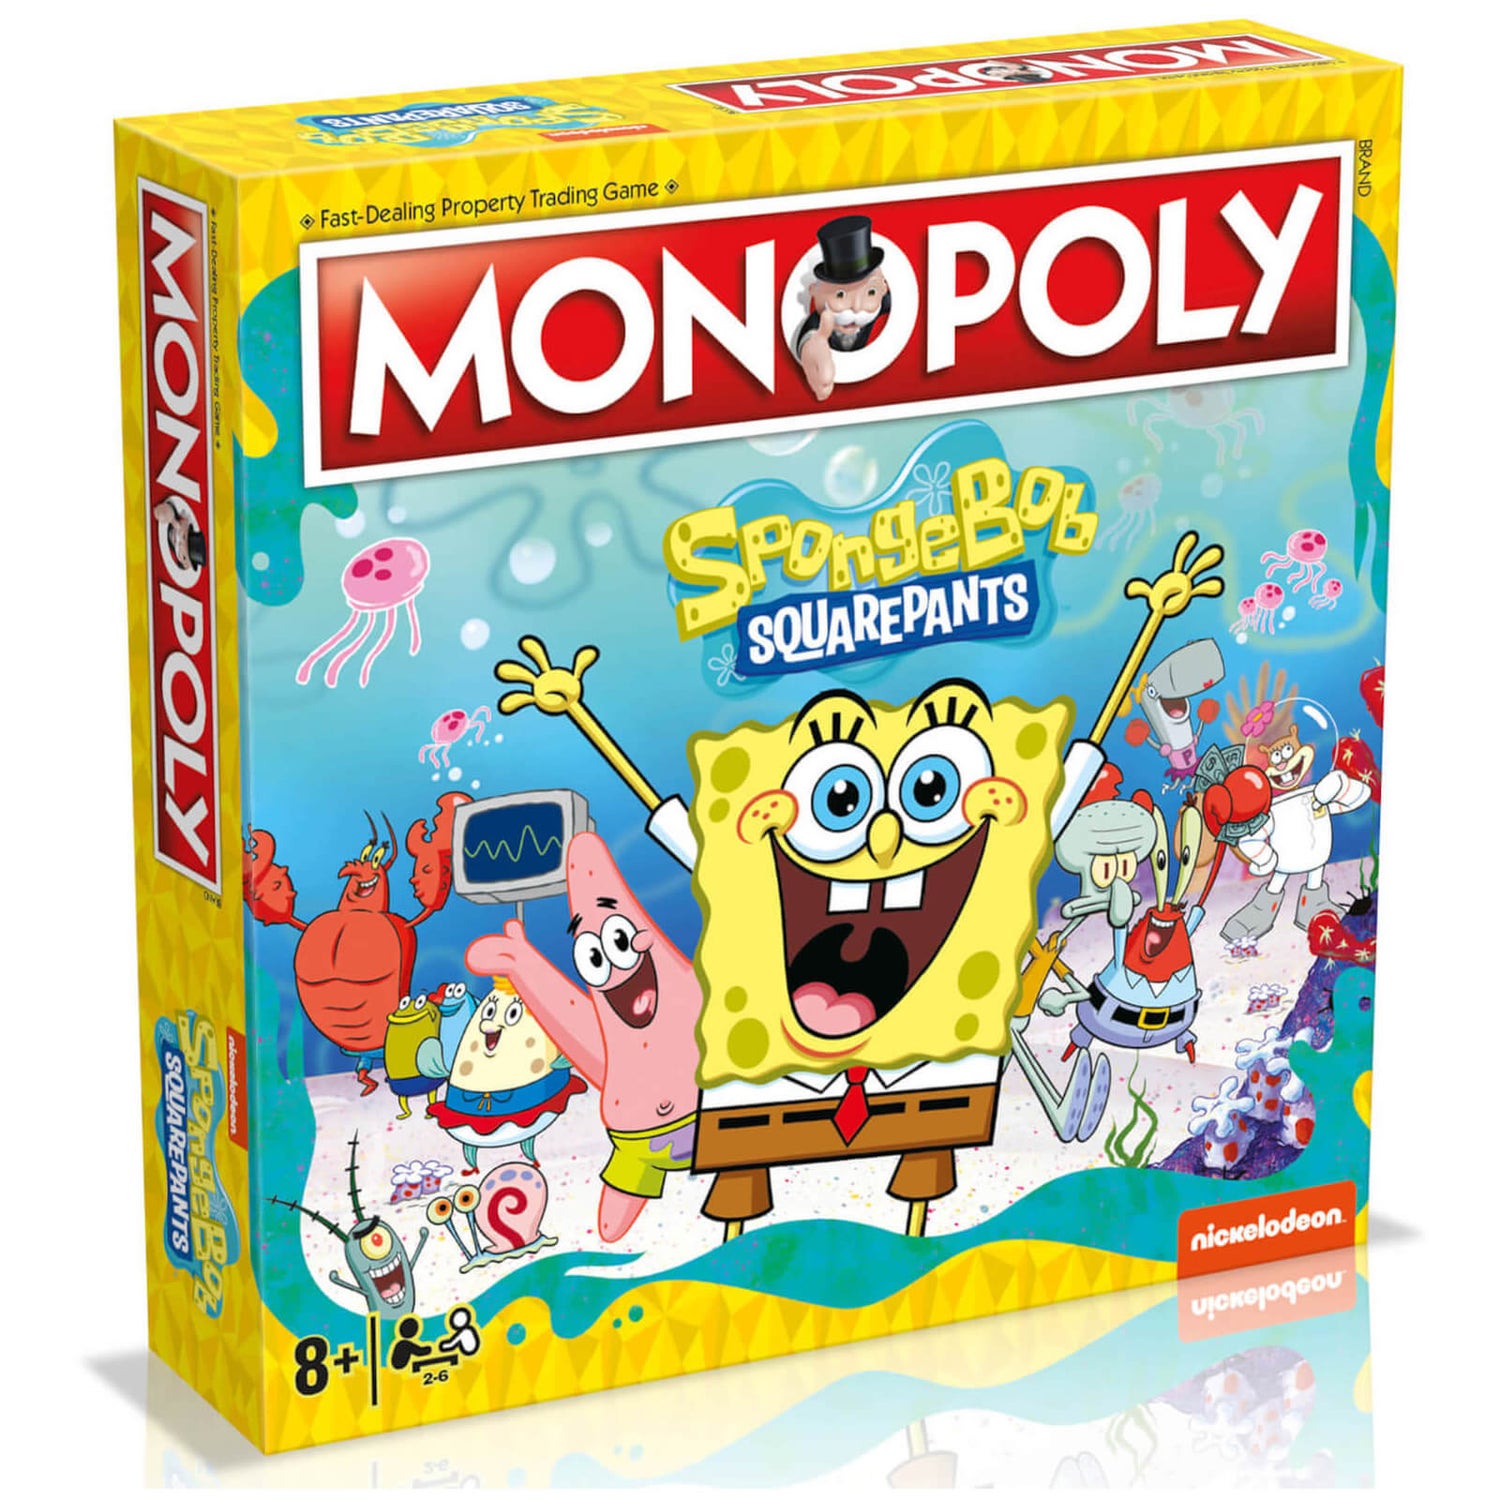 Monopoly Board Game - Spongebob Squarepants